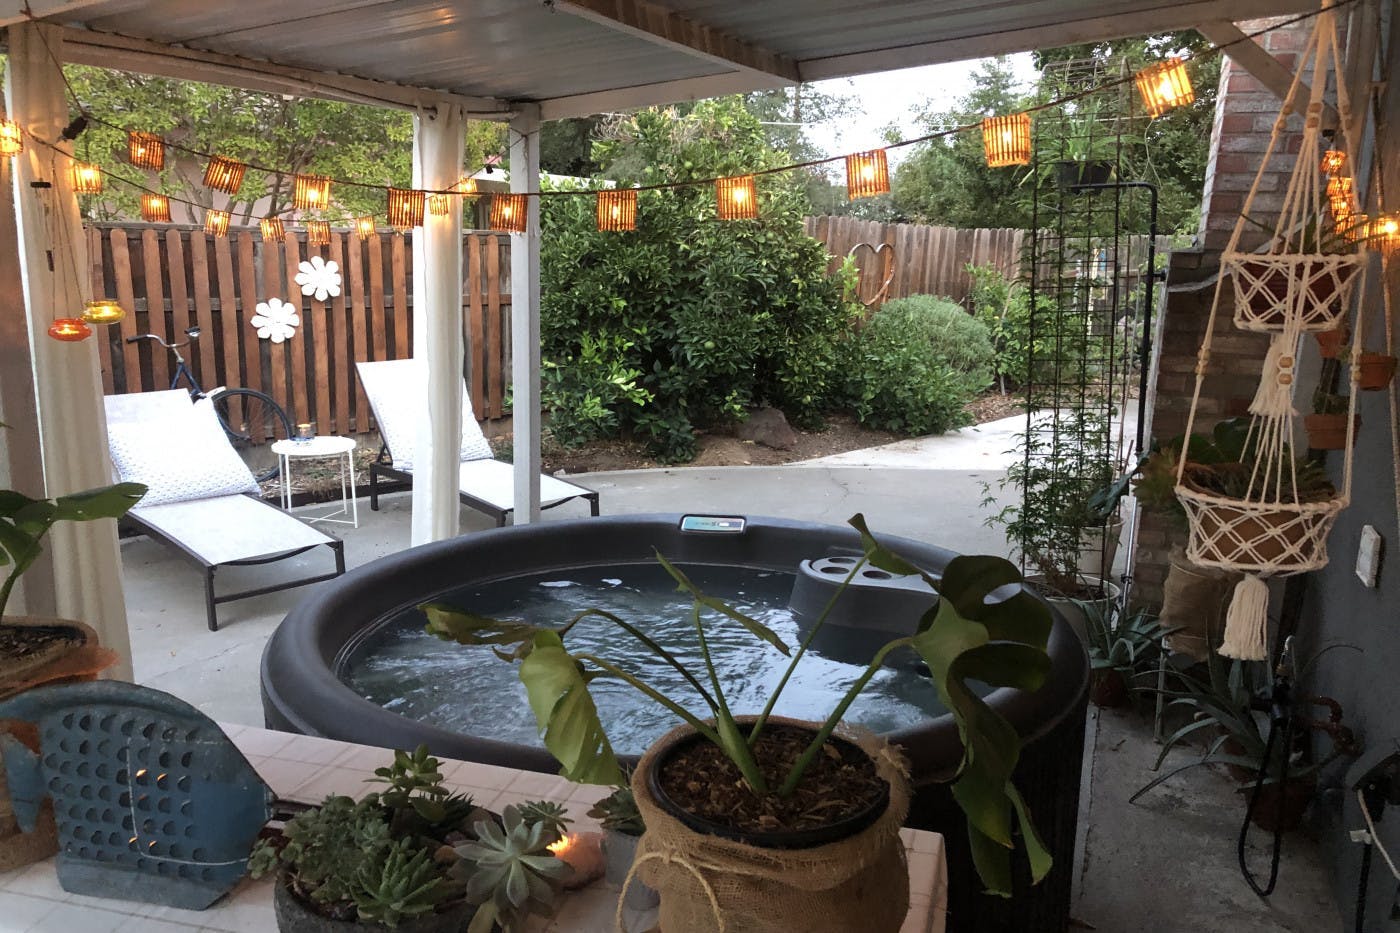 Arden Oasis Spa - Hot Tub, Sauna, and Lounge. Day/Night, Rain/Shine!